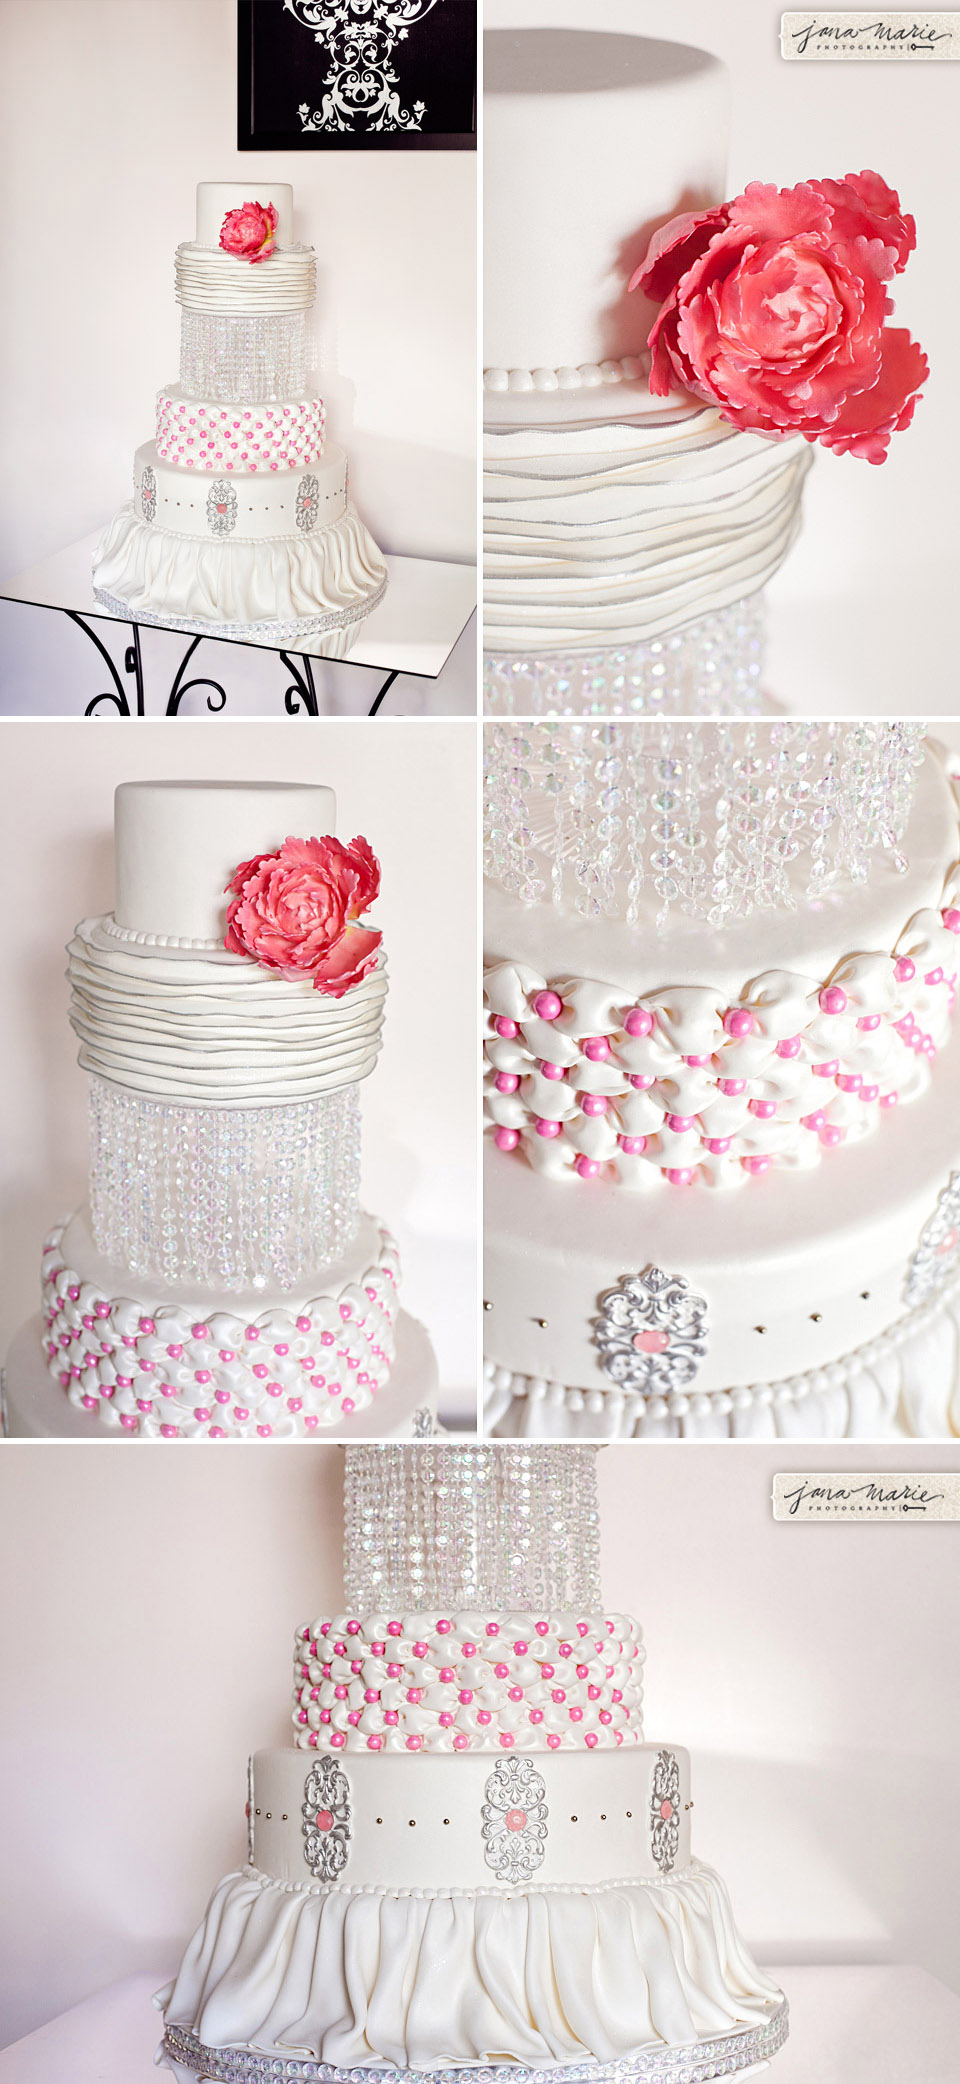 Jana Marler, Pink cakes, diamonds, grays, Renae Feagin, KC wedding cakes